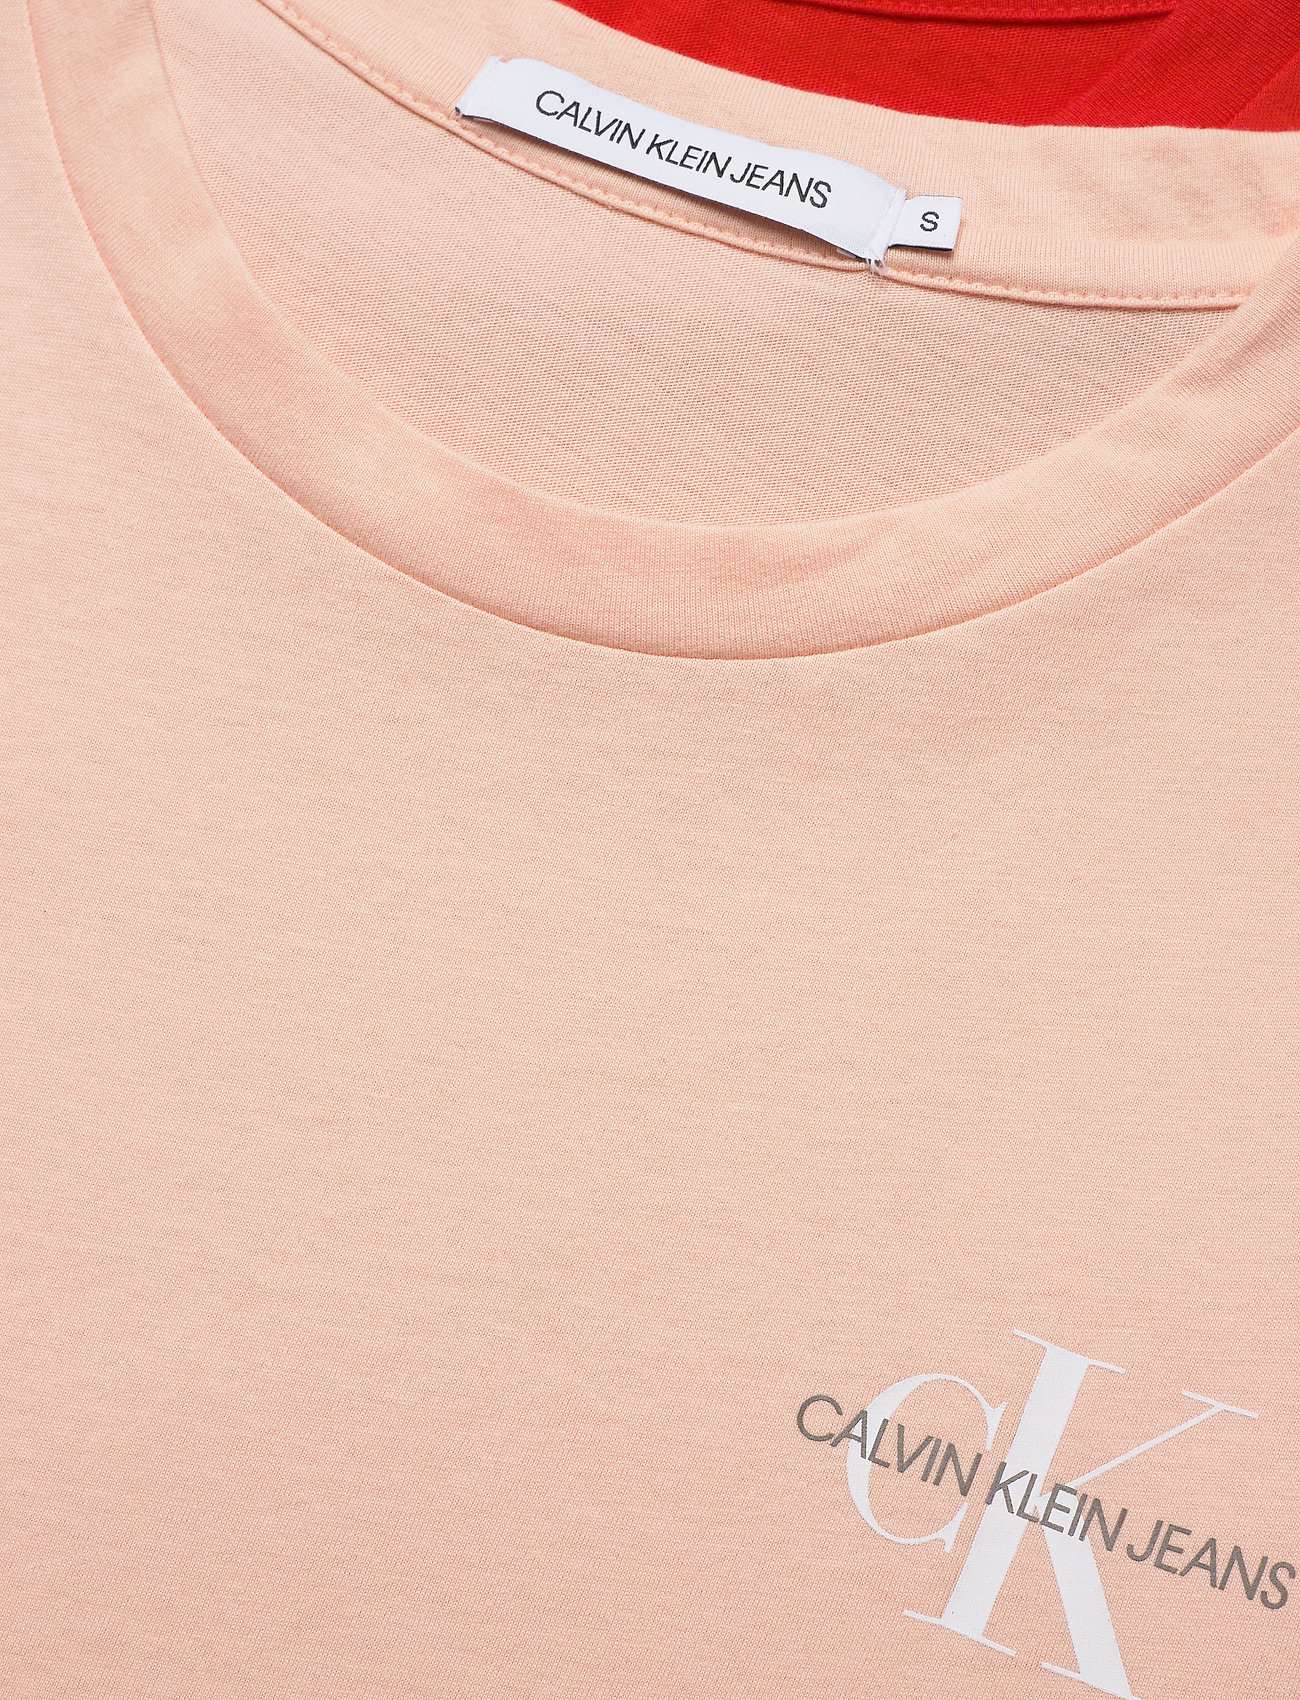 pink calvin klein shirt